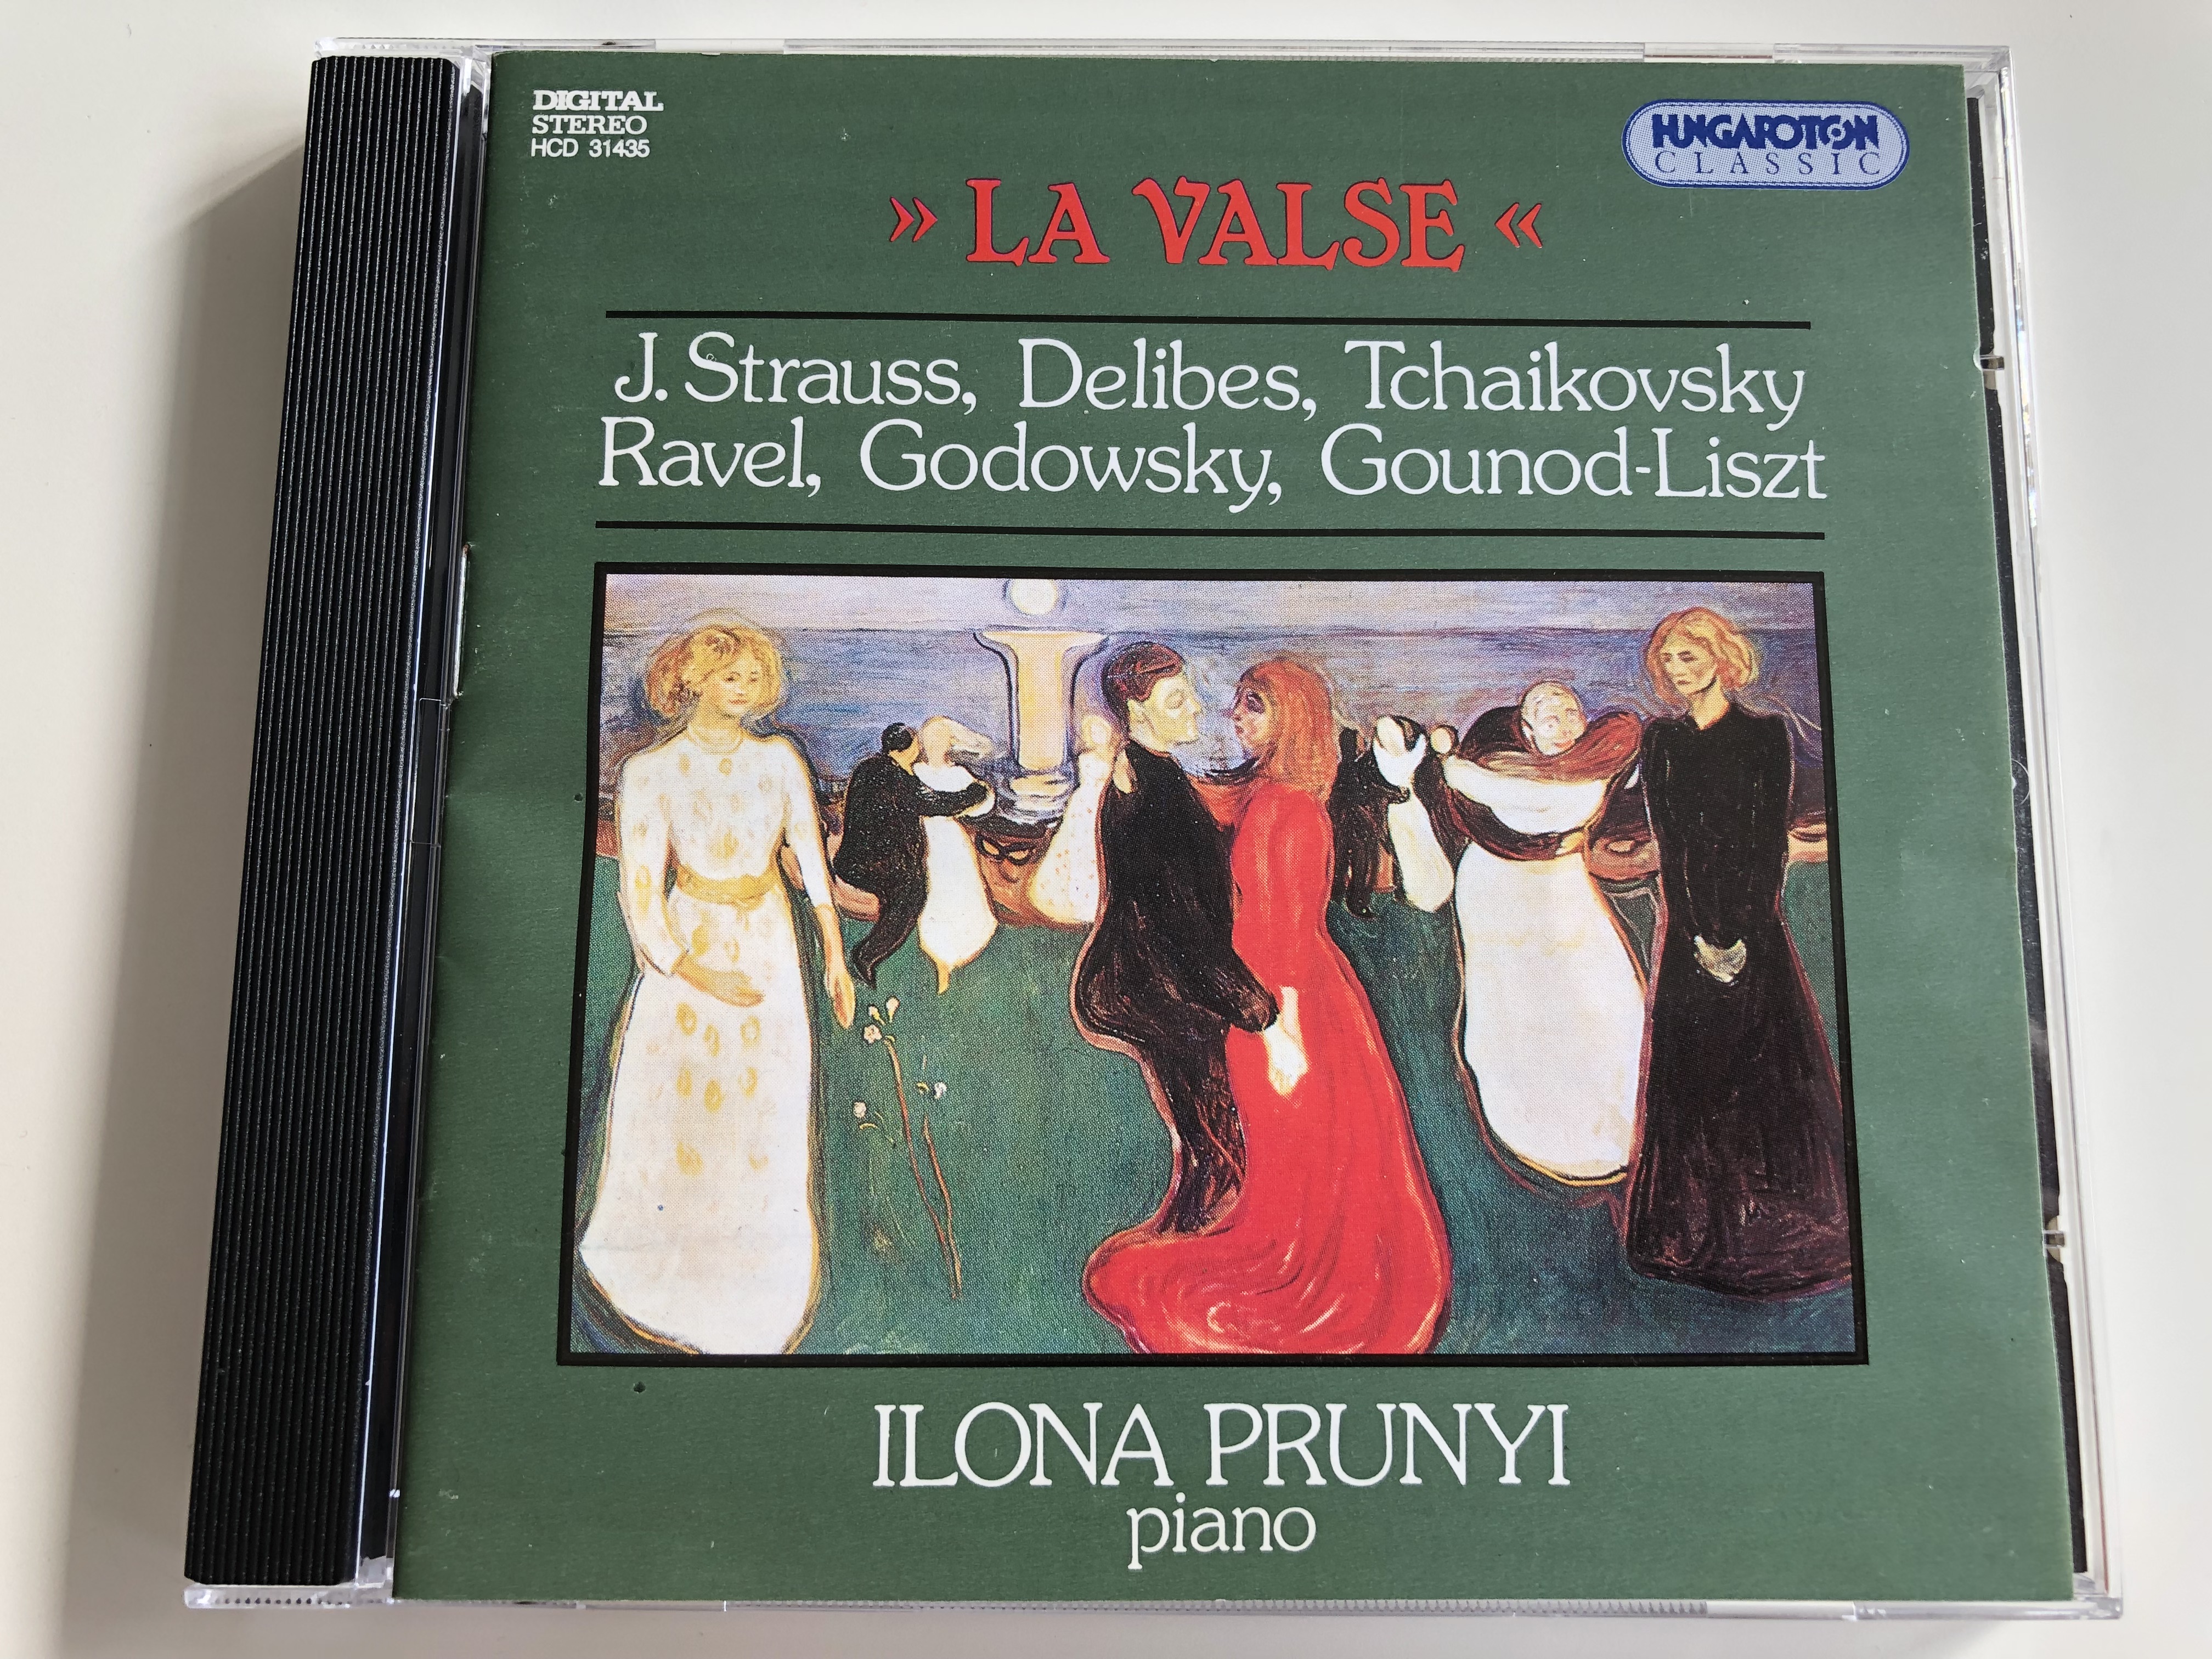 la-valse-j.-strauss-delibes-tchaikovsky-ravel-godowsky-gounod-liszt-ilona-prunyi-piano-hungaroton-classic-audio-cd-1992-hcd-31435-1-.jpg